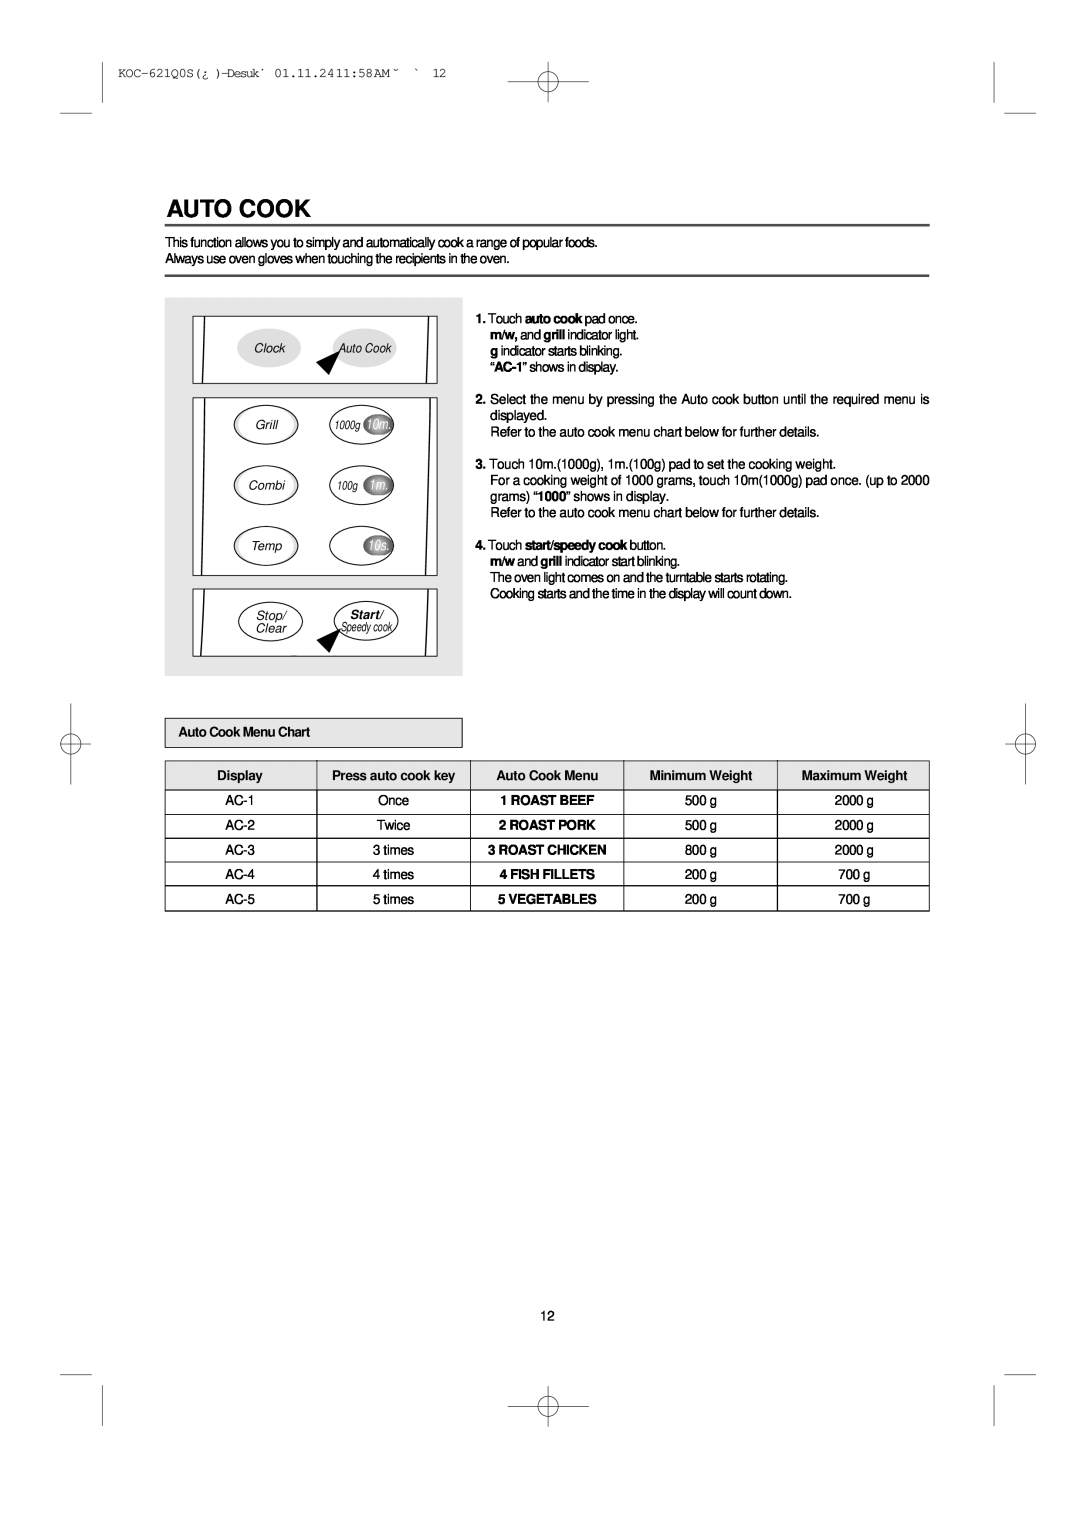 Daewoo KOC-621Q Touch start/speedy cook button, Auto Cook Menu Chart, Display, Press auto cook key, Minimum Weight 